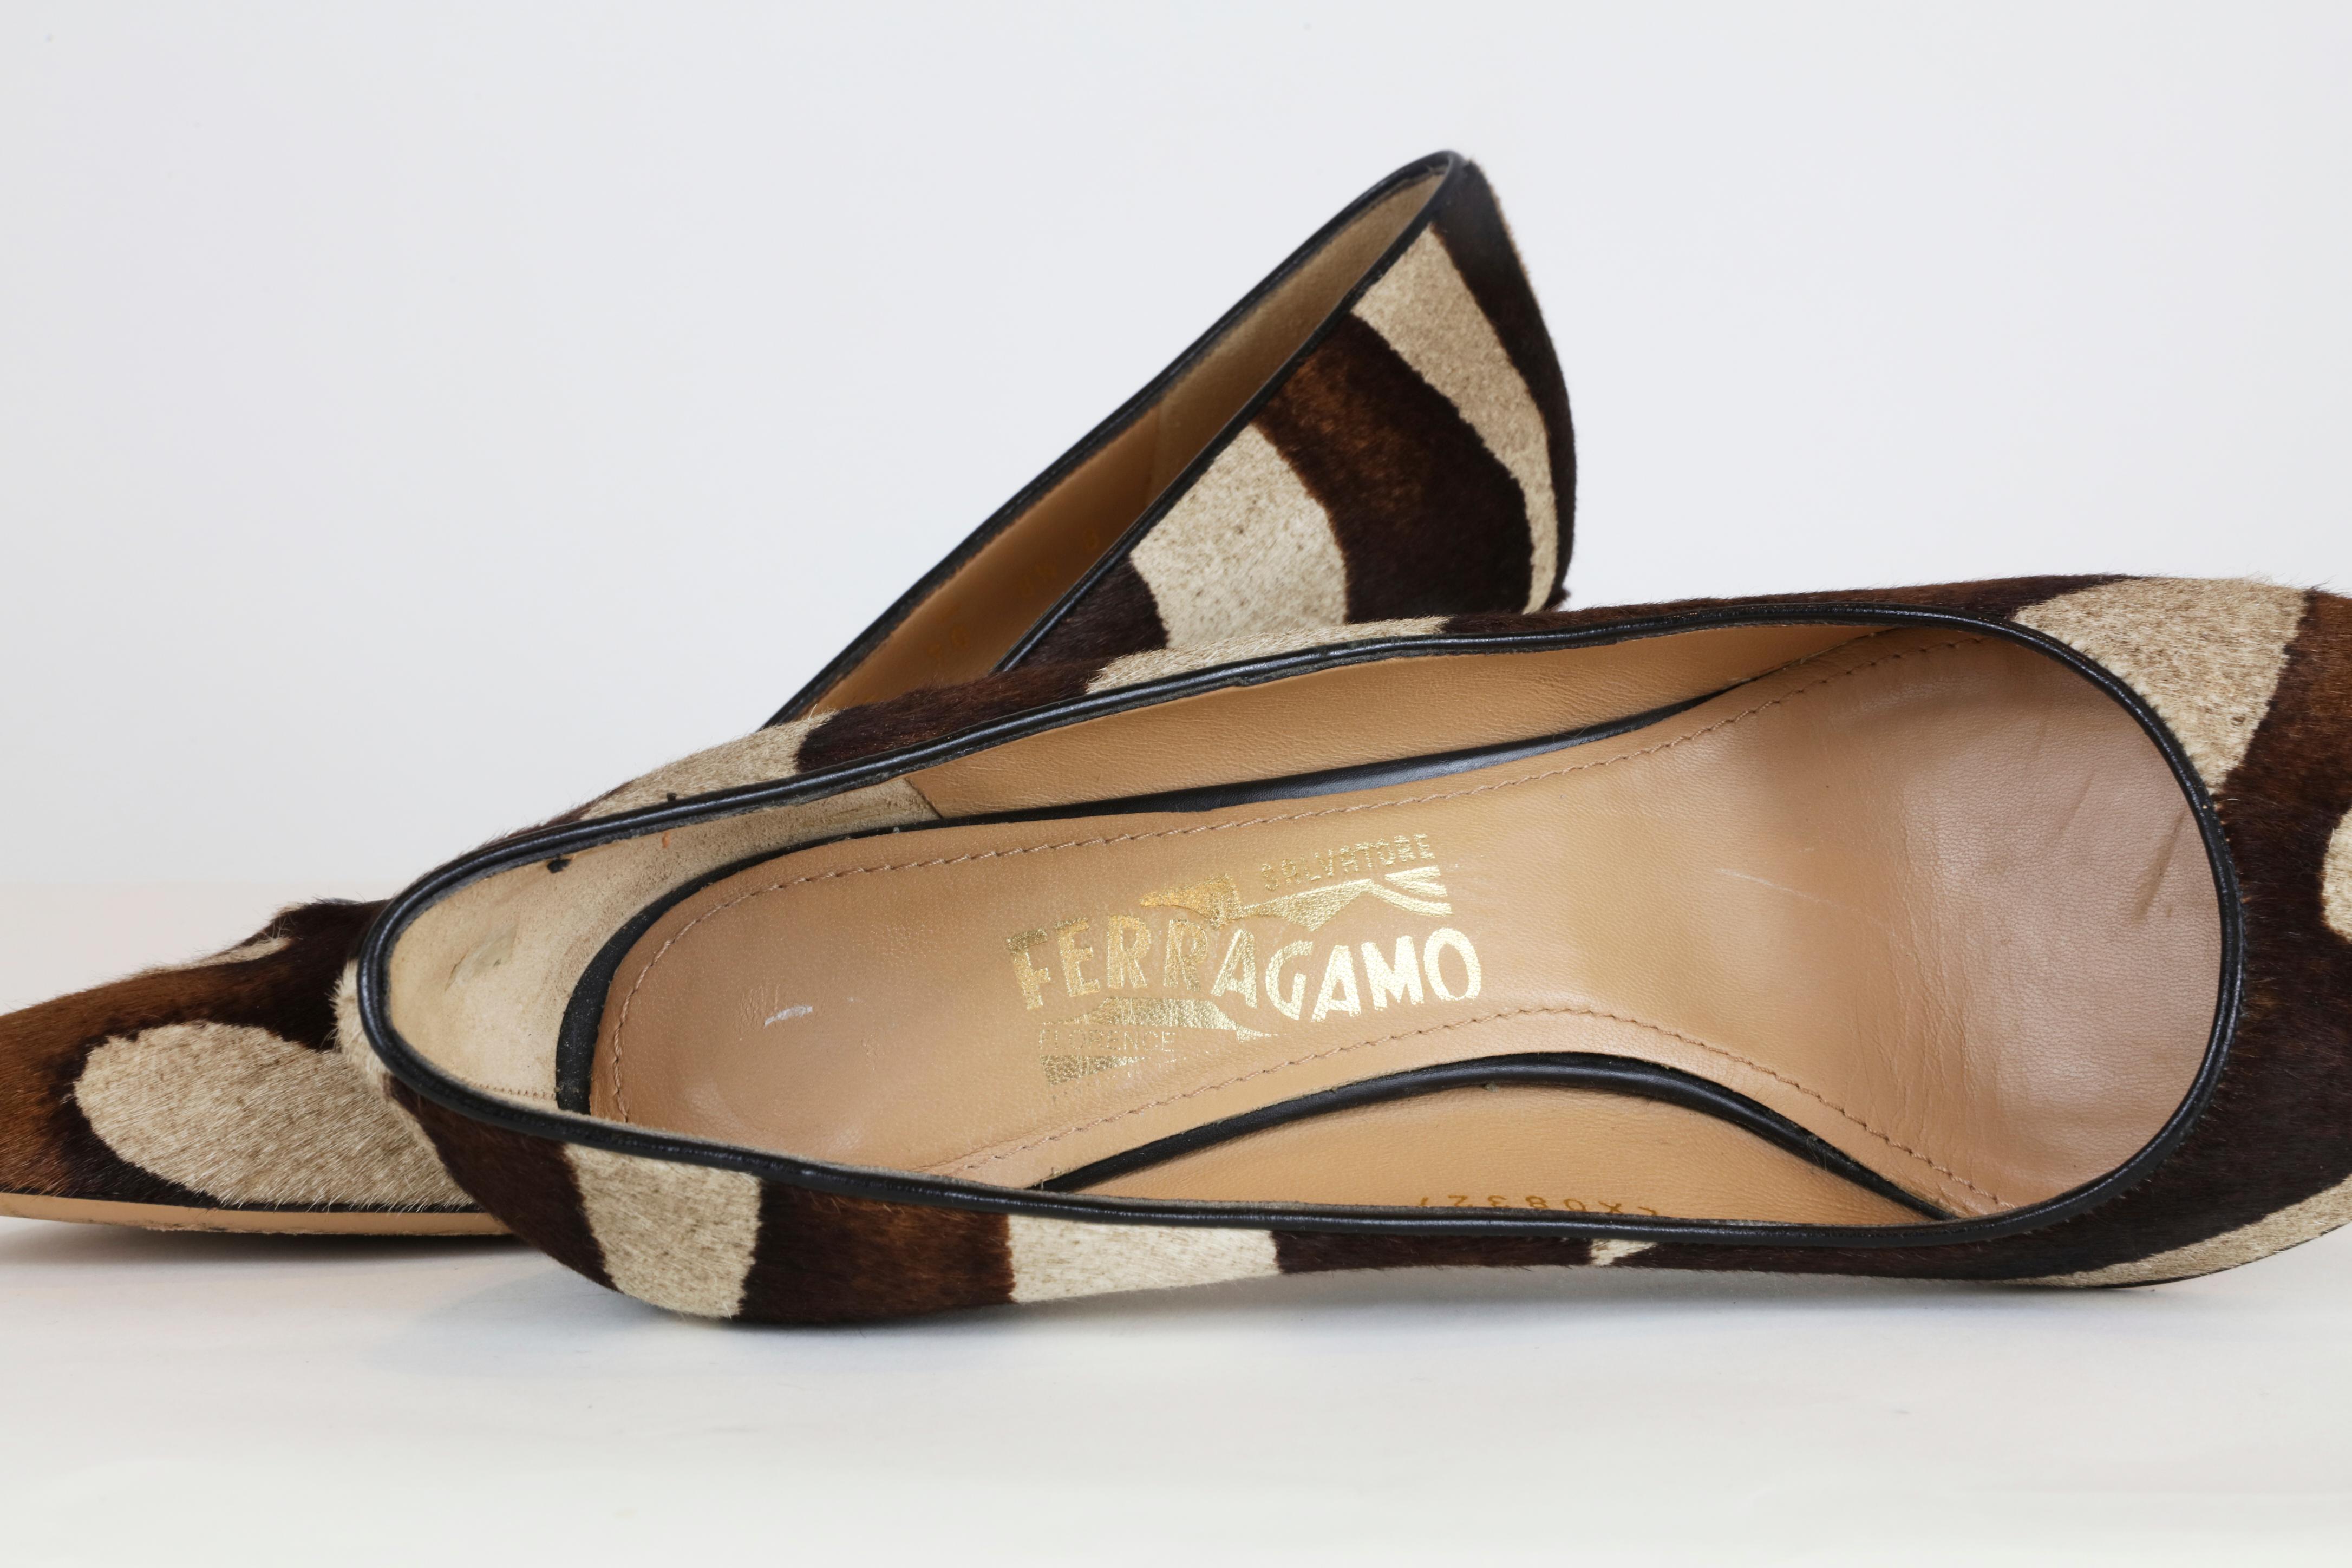 Salvatore Ferragamo Brown Pony Skin Heels
Size 8.5 US
Made in Italy